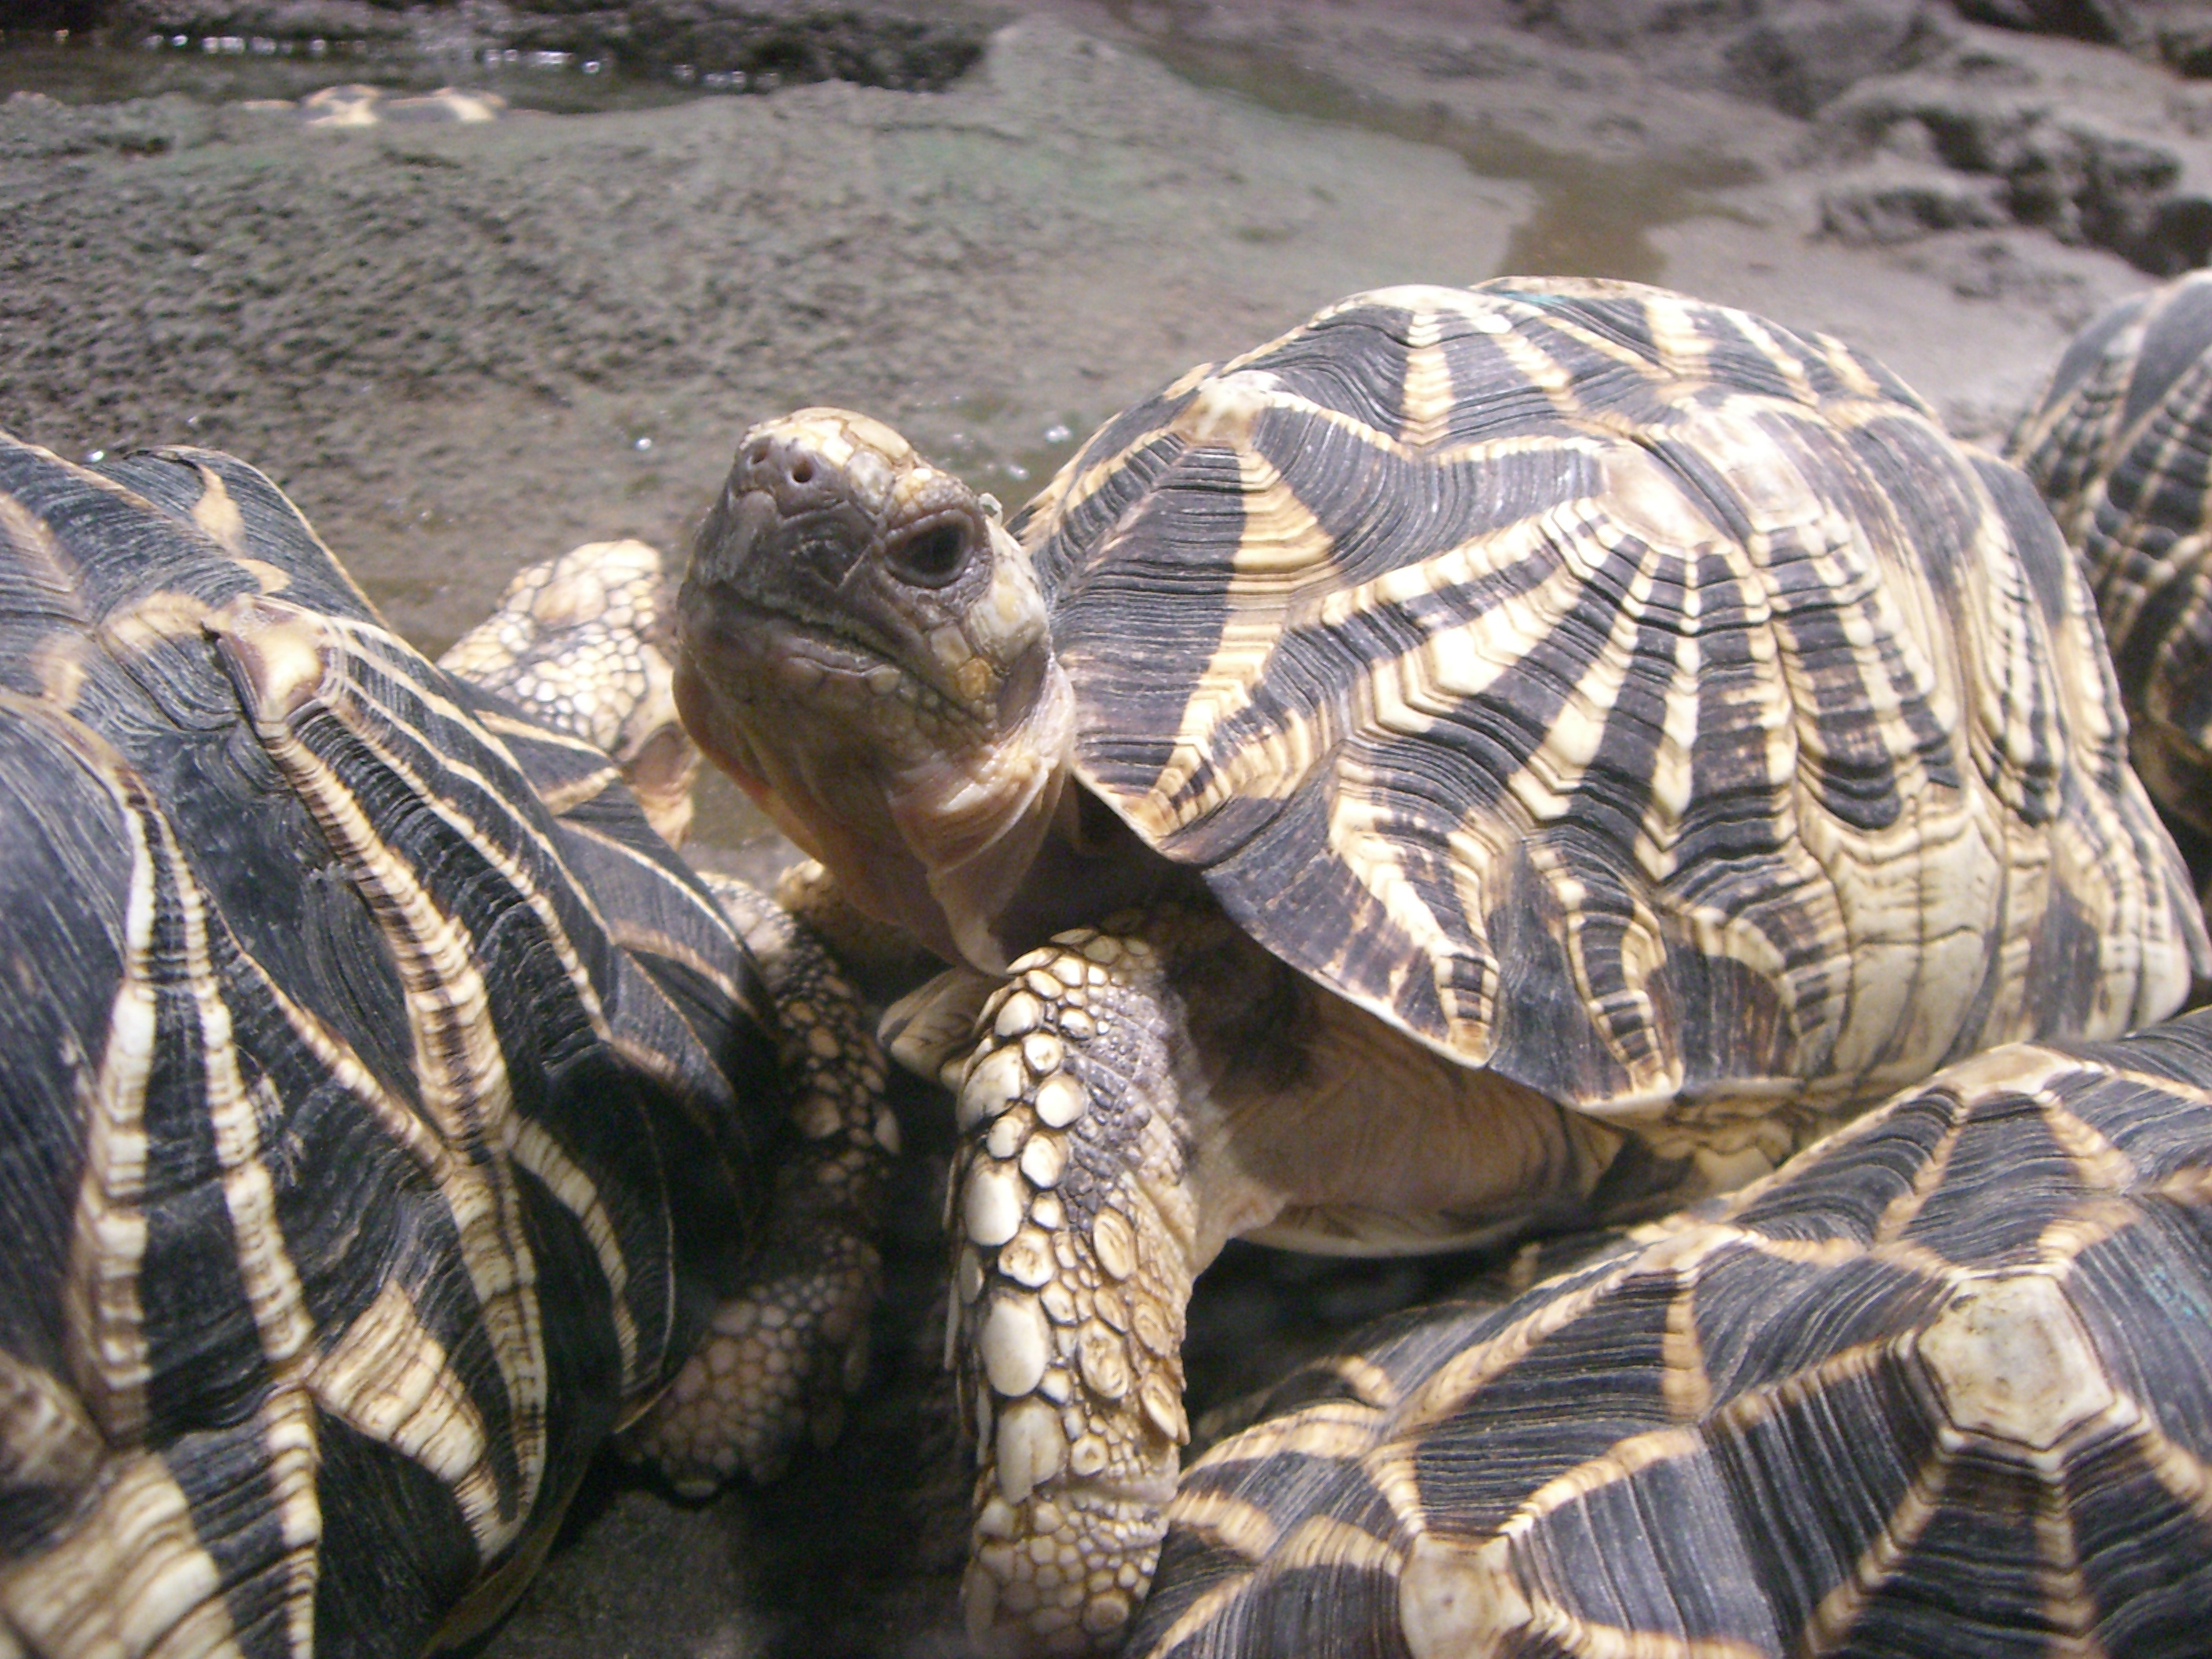 Burmese Star Tortoise photo by ゆうき315 CC BY-SA 3.0